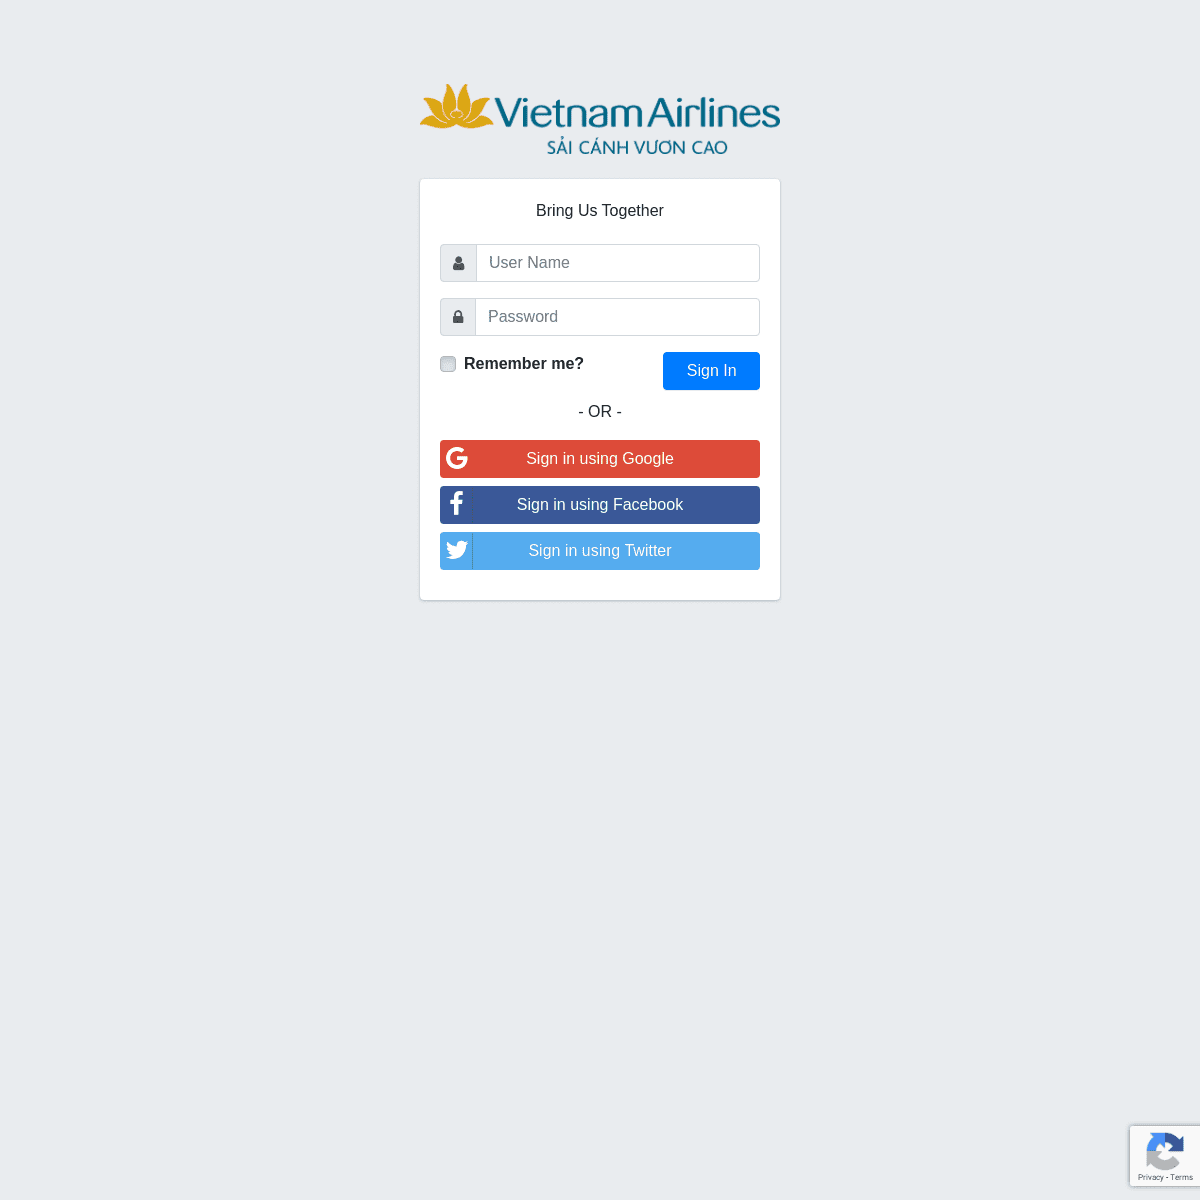 A complete backup of onlineticket.com.vn